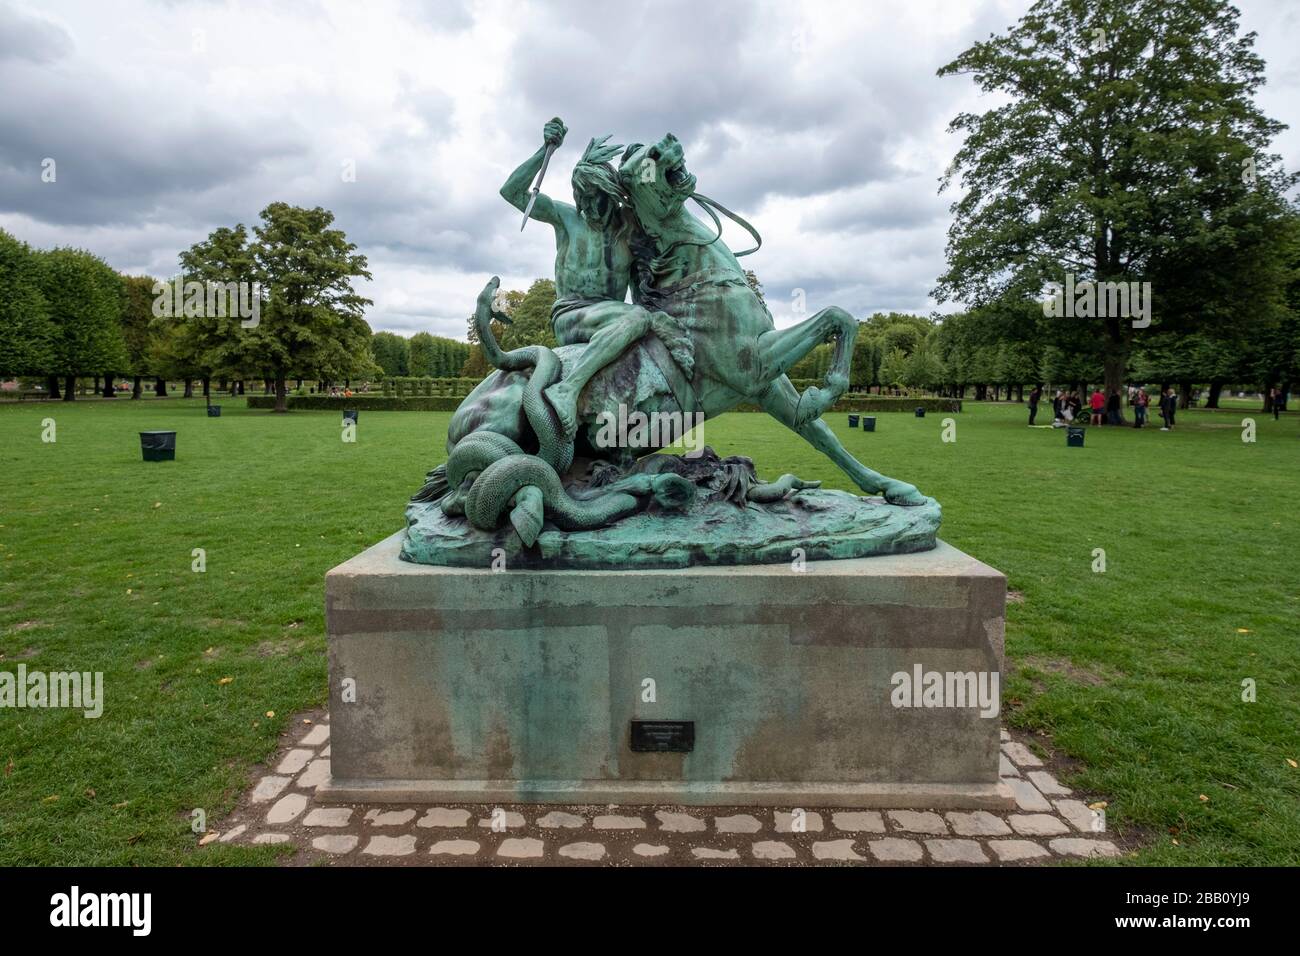 Sculpture of a man on horseback fighting a snake in the Rosenborg ...